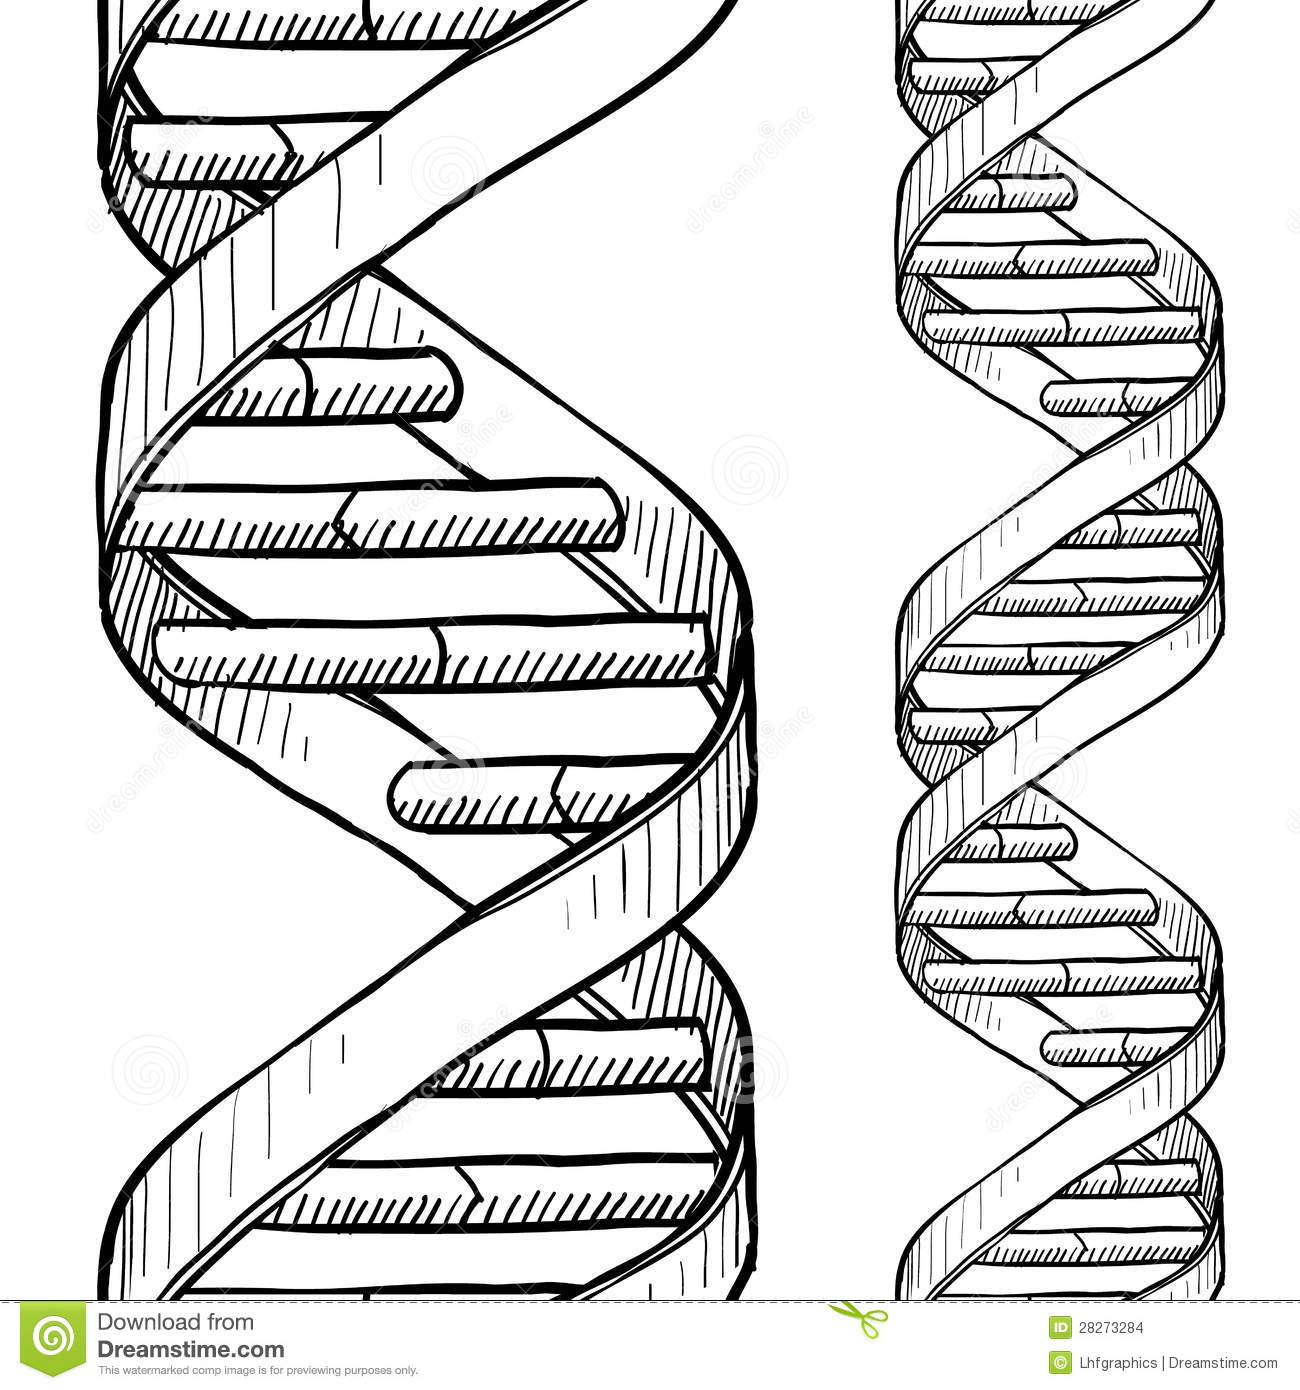 DNA Art Drawing